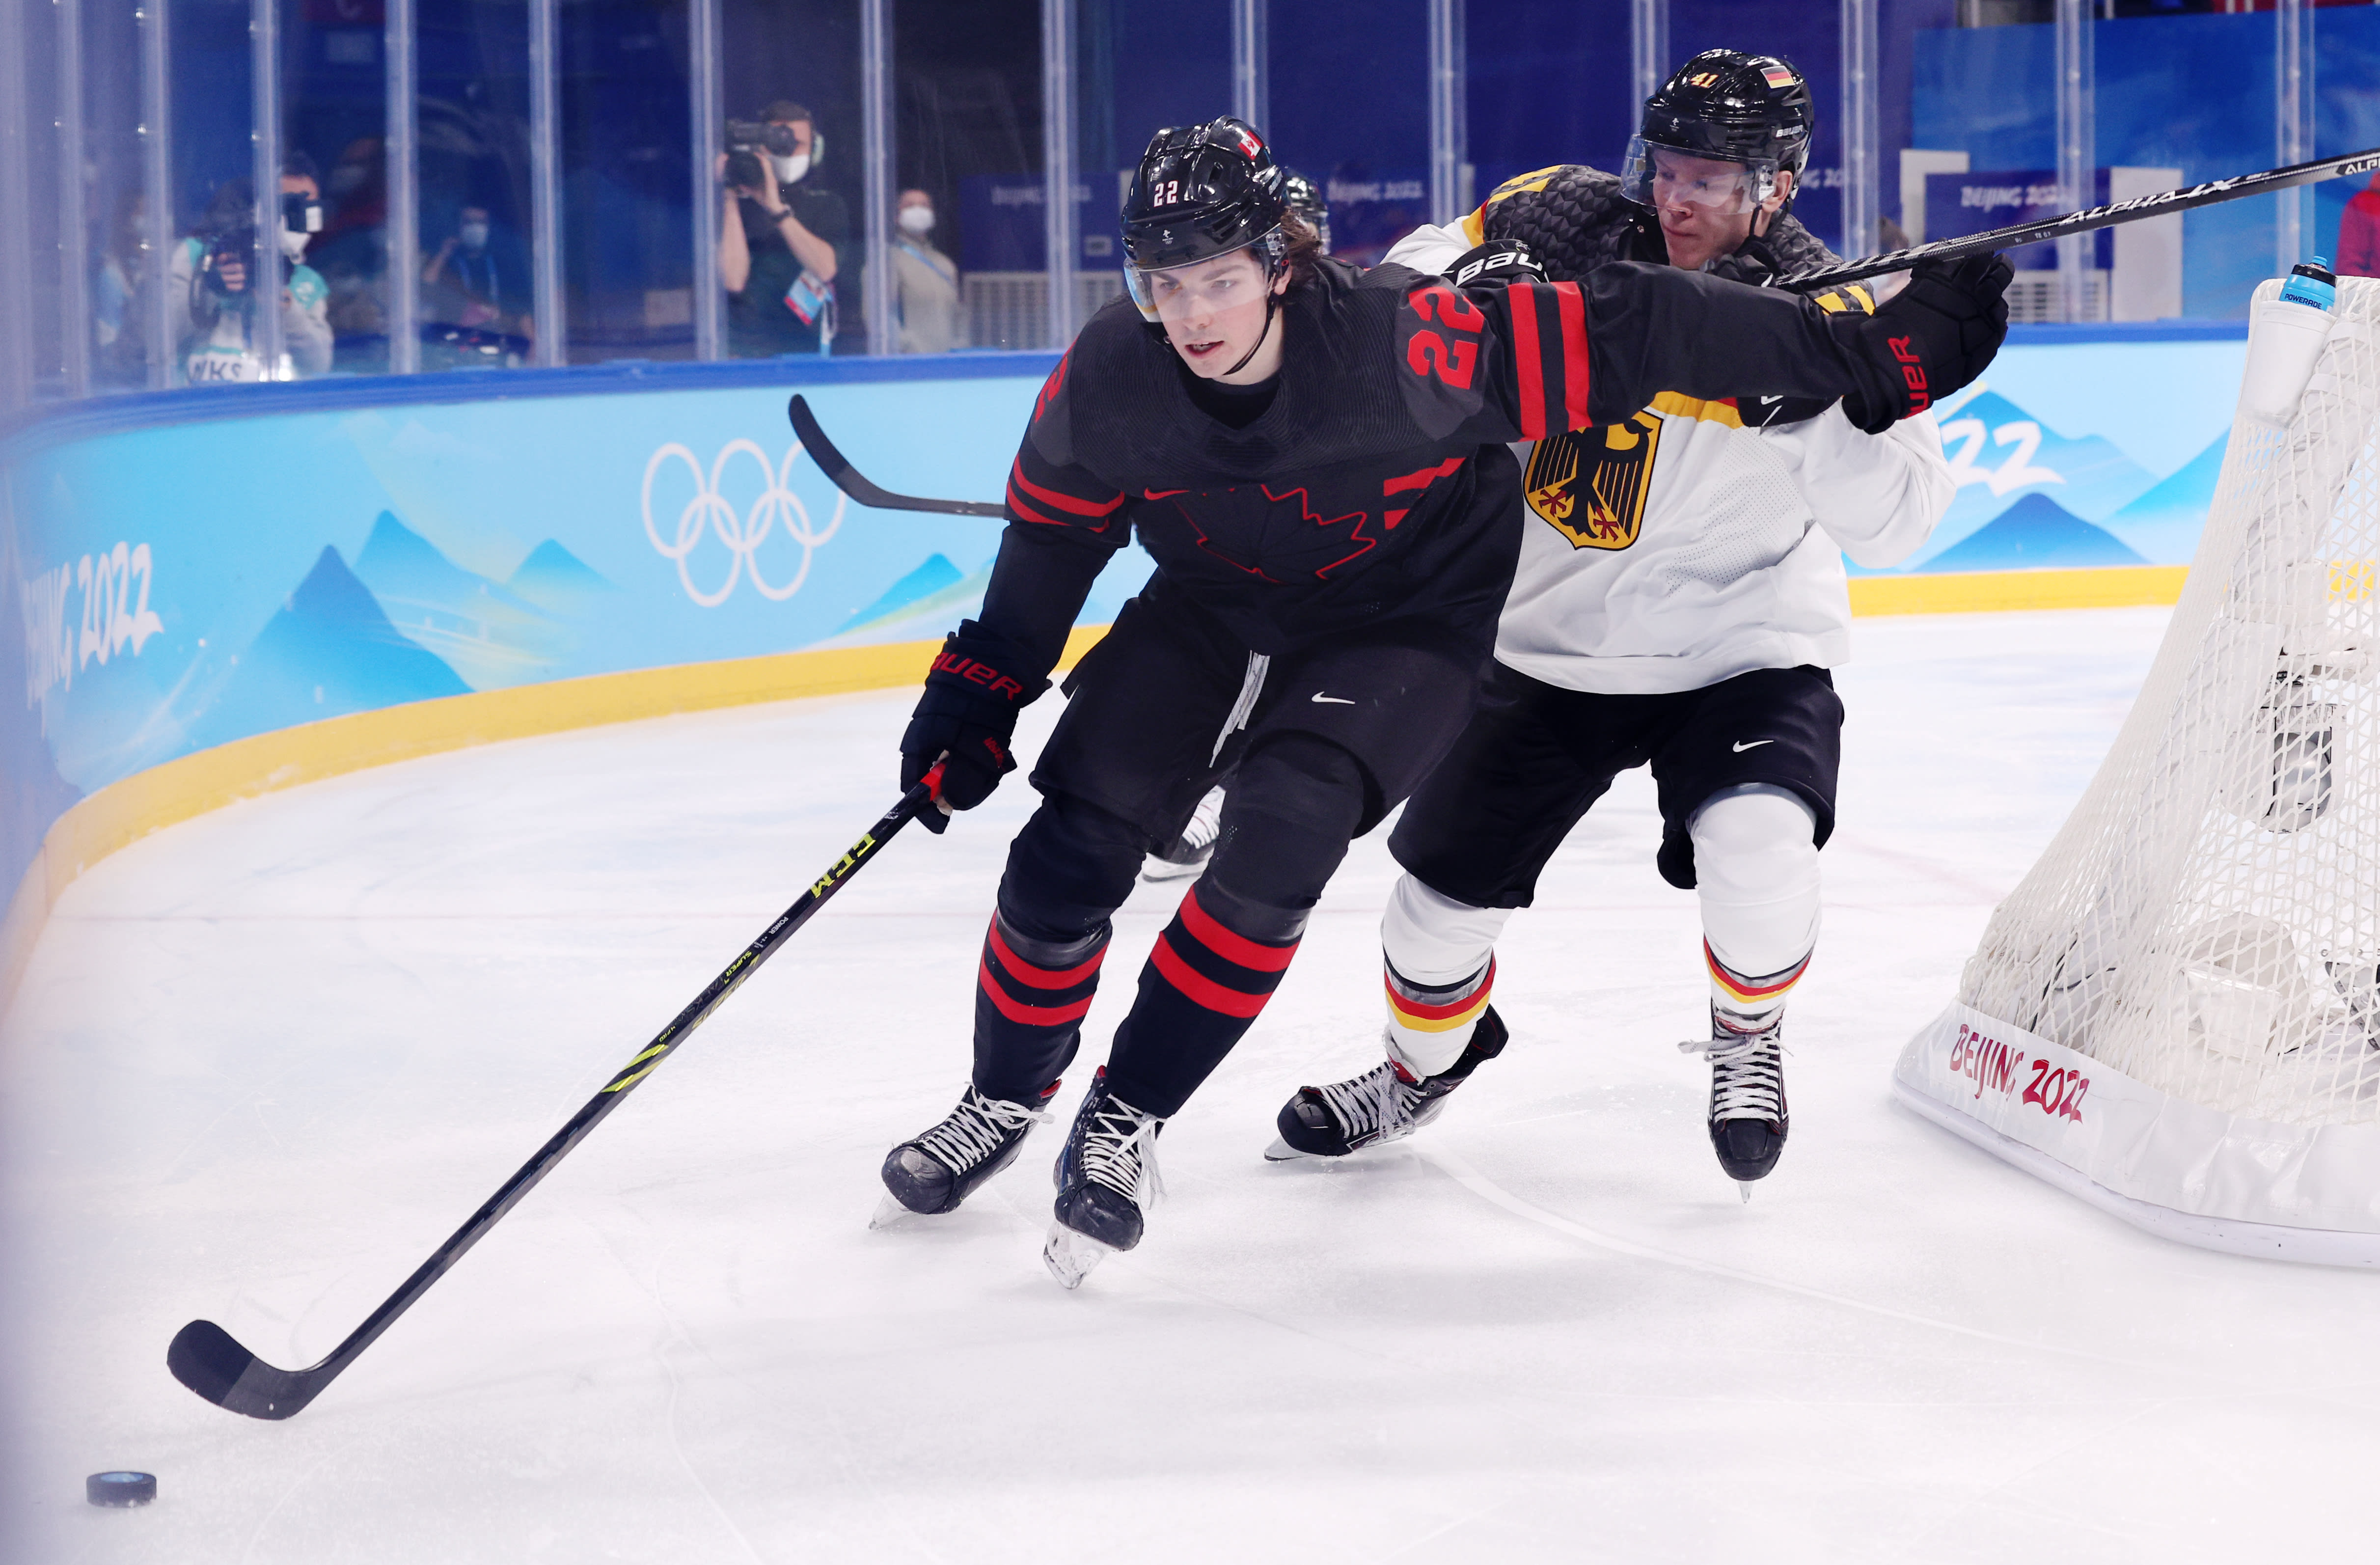 ice hockey world championship 2022 watch online